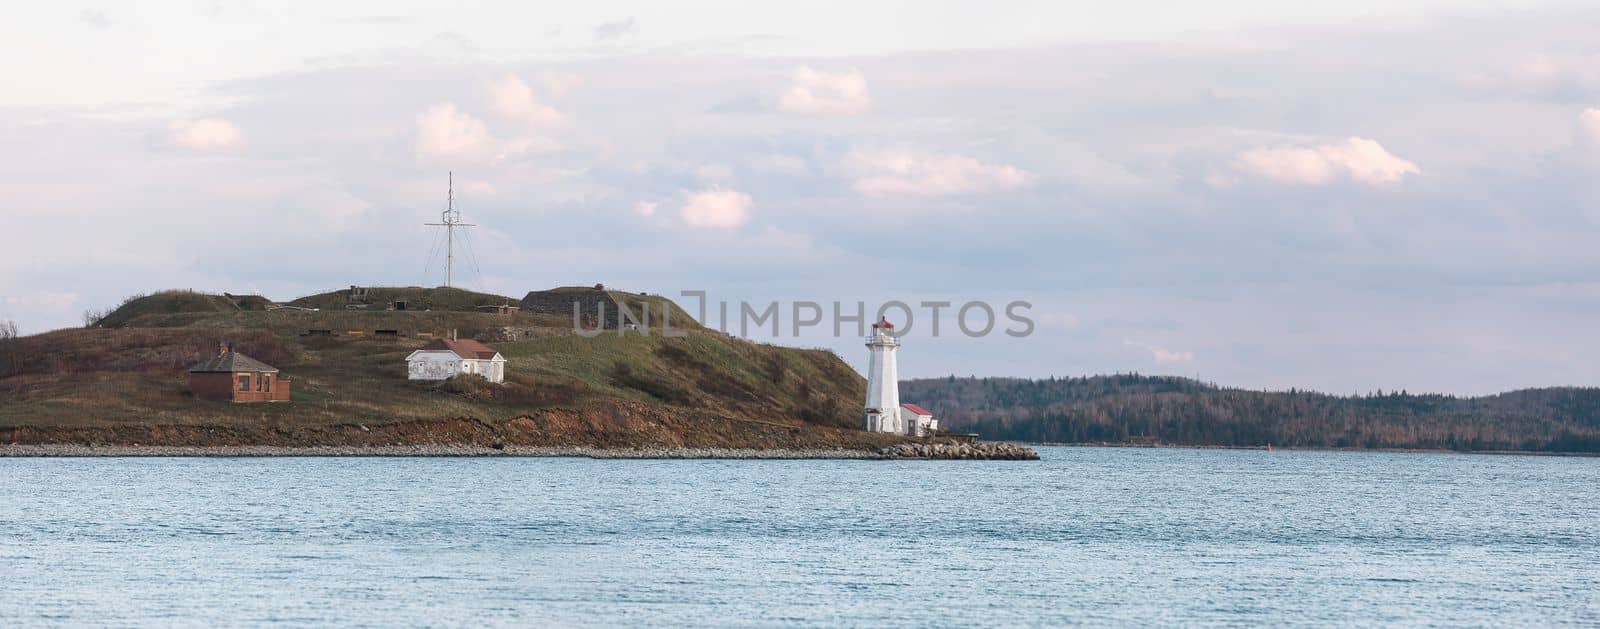 Lighthouse in Halifax Nova Scotia Canada by palinchak